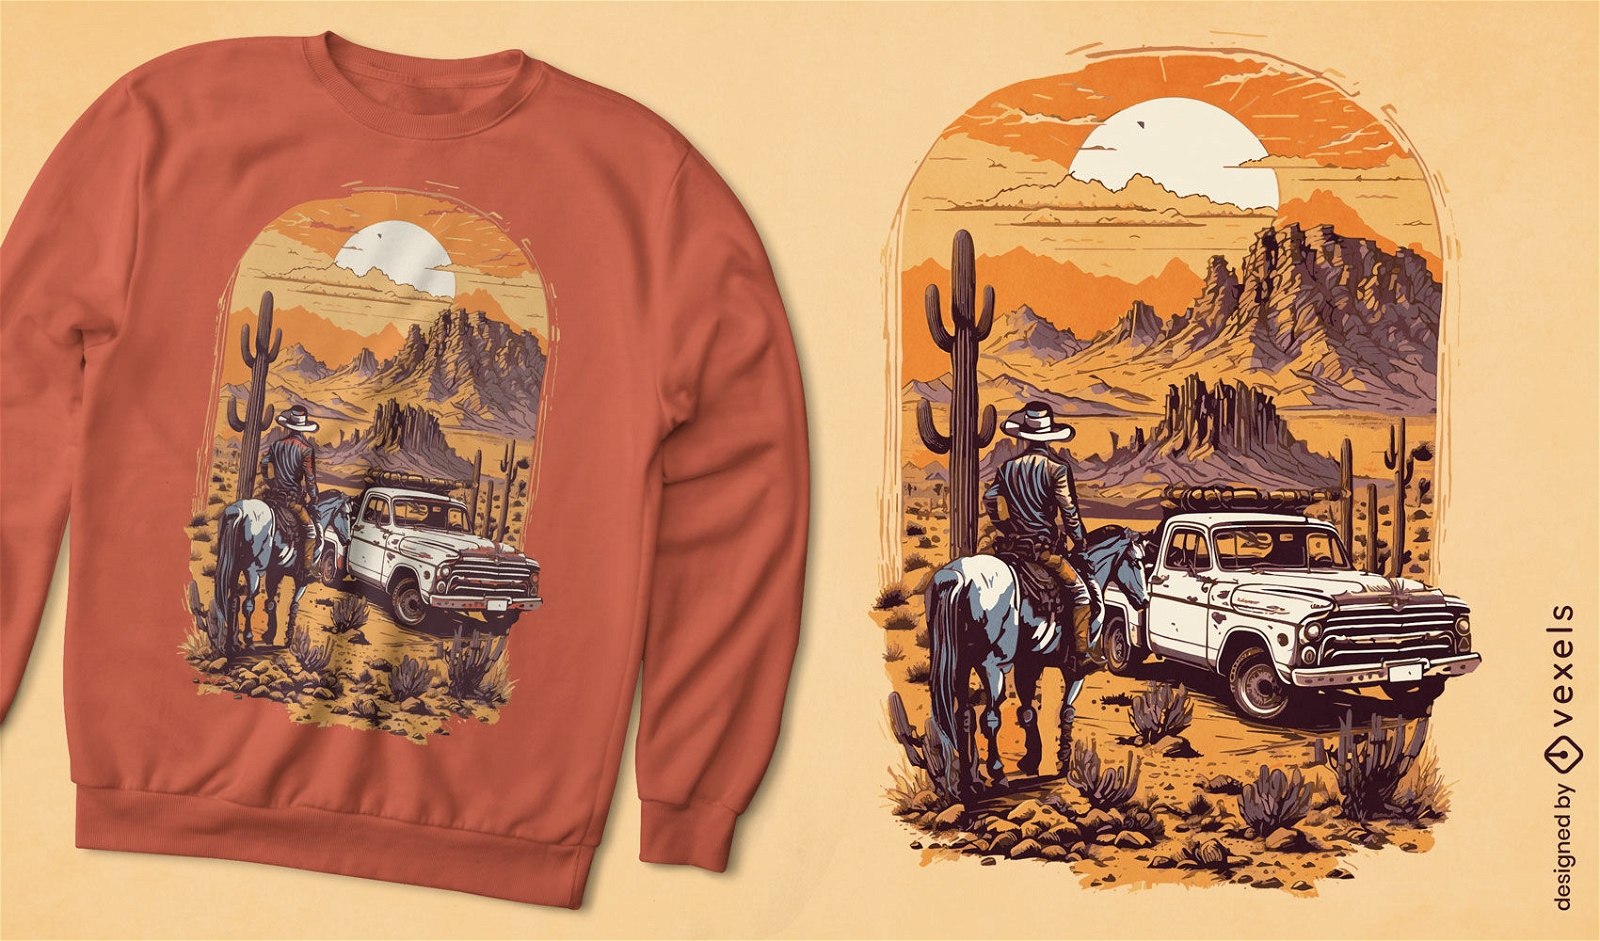  Vintage cowboy and truck t-shirt design